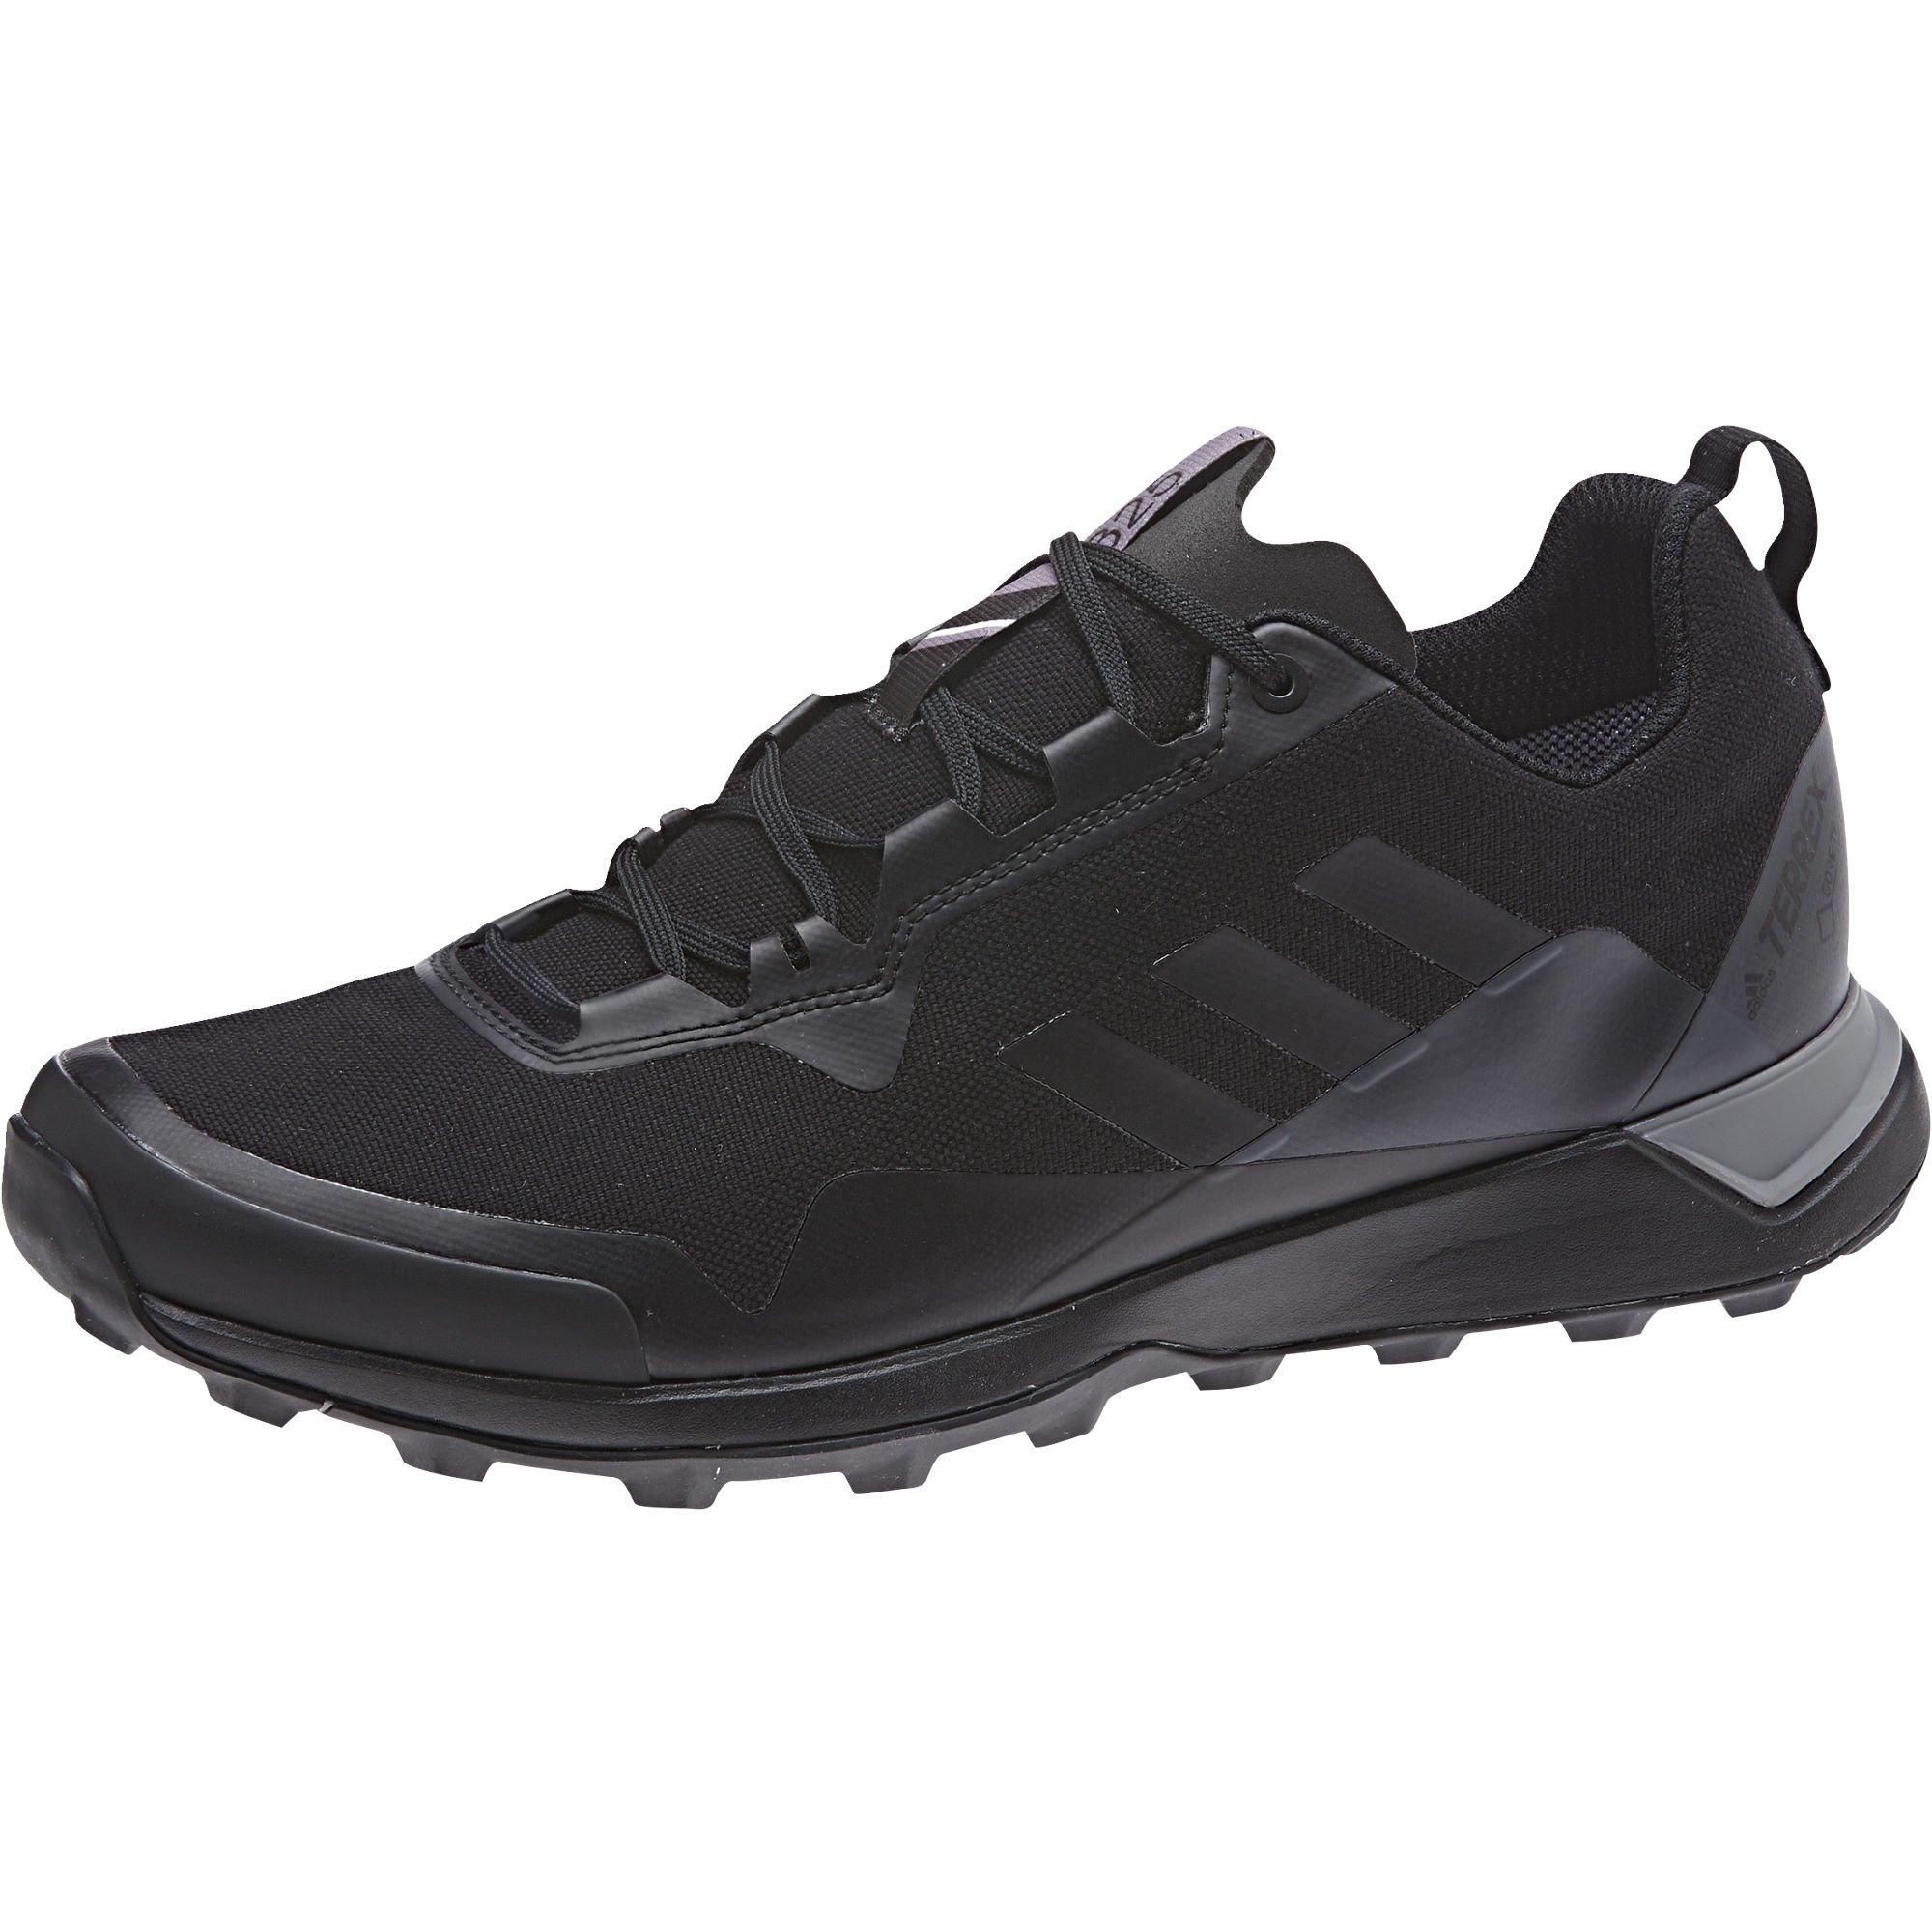 adidas cmtk gtx mens trail running shoes